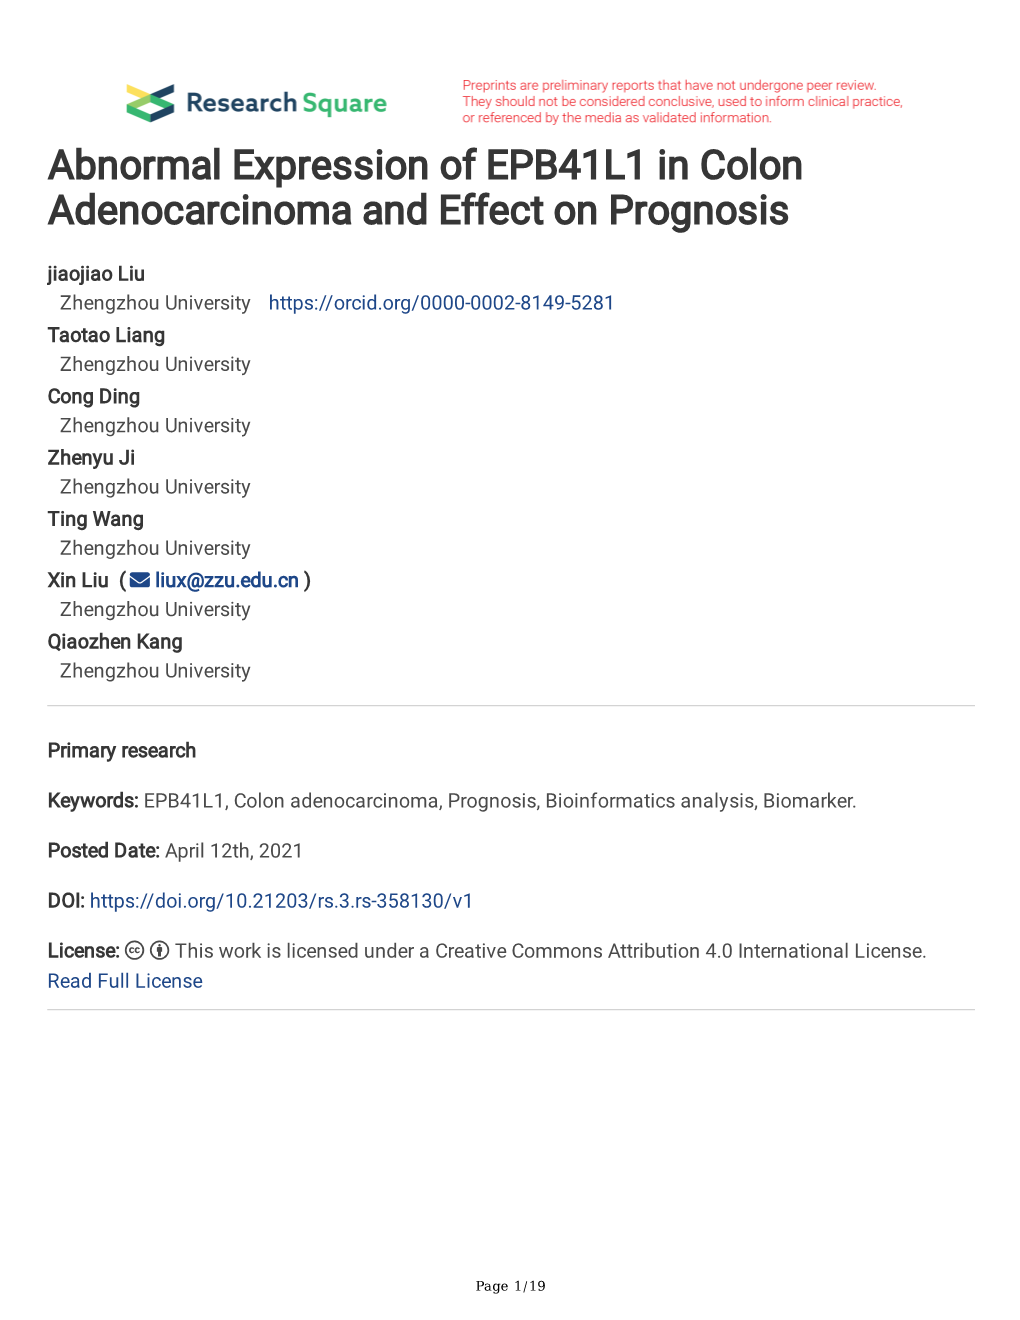 Abnormal Expression of EPB41L1 in Colon Adenocarcinoma and Effect